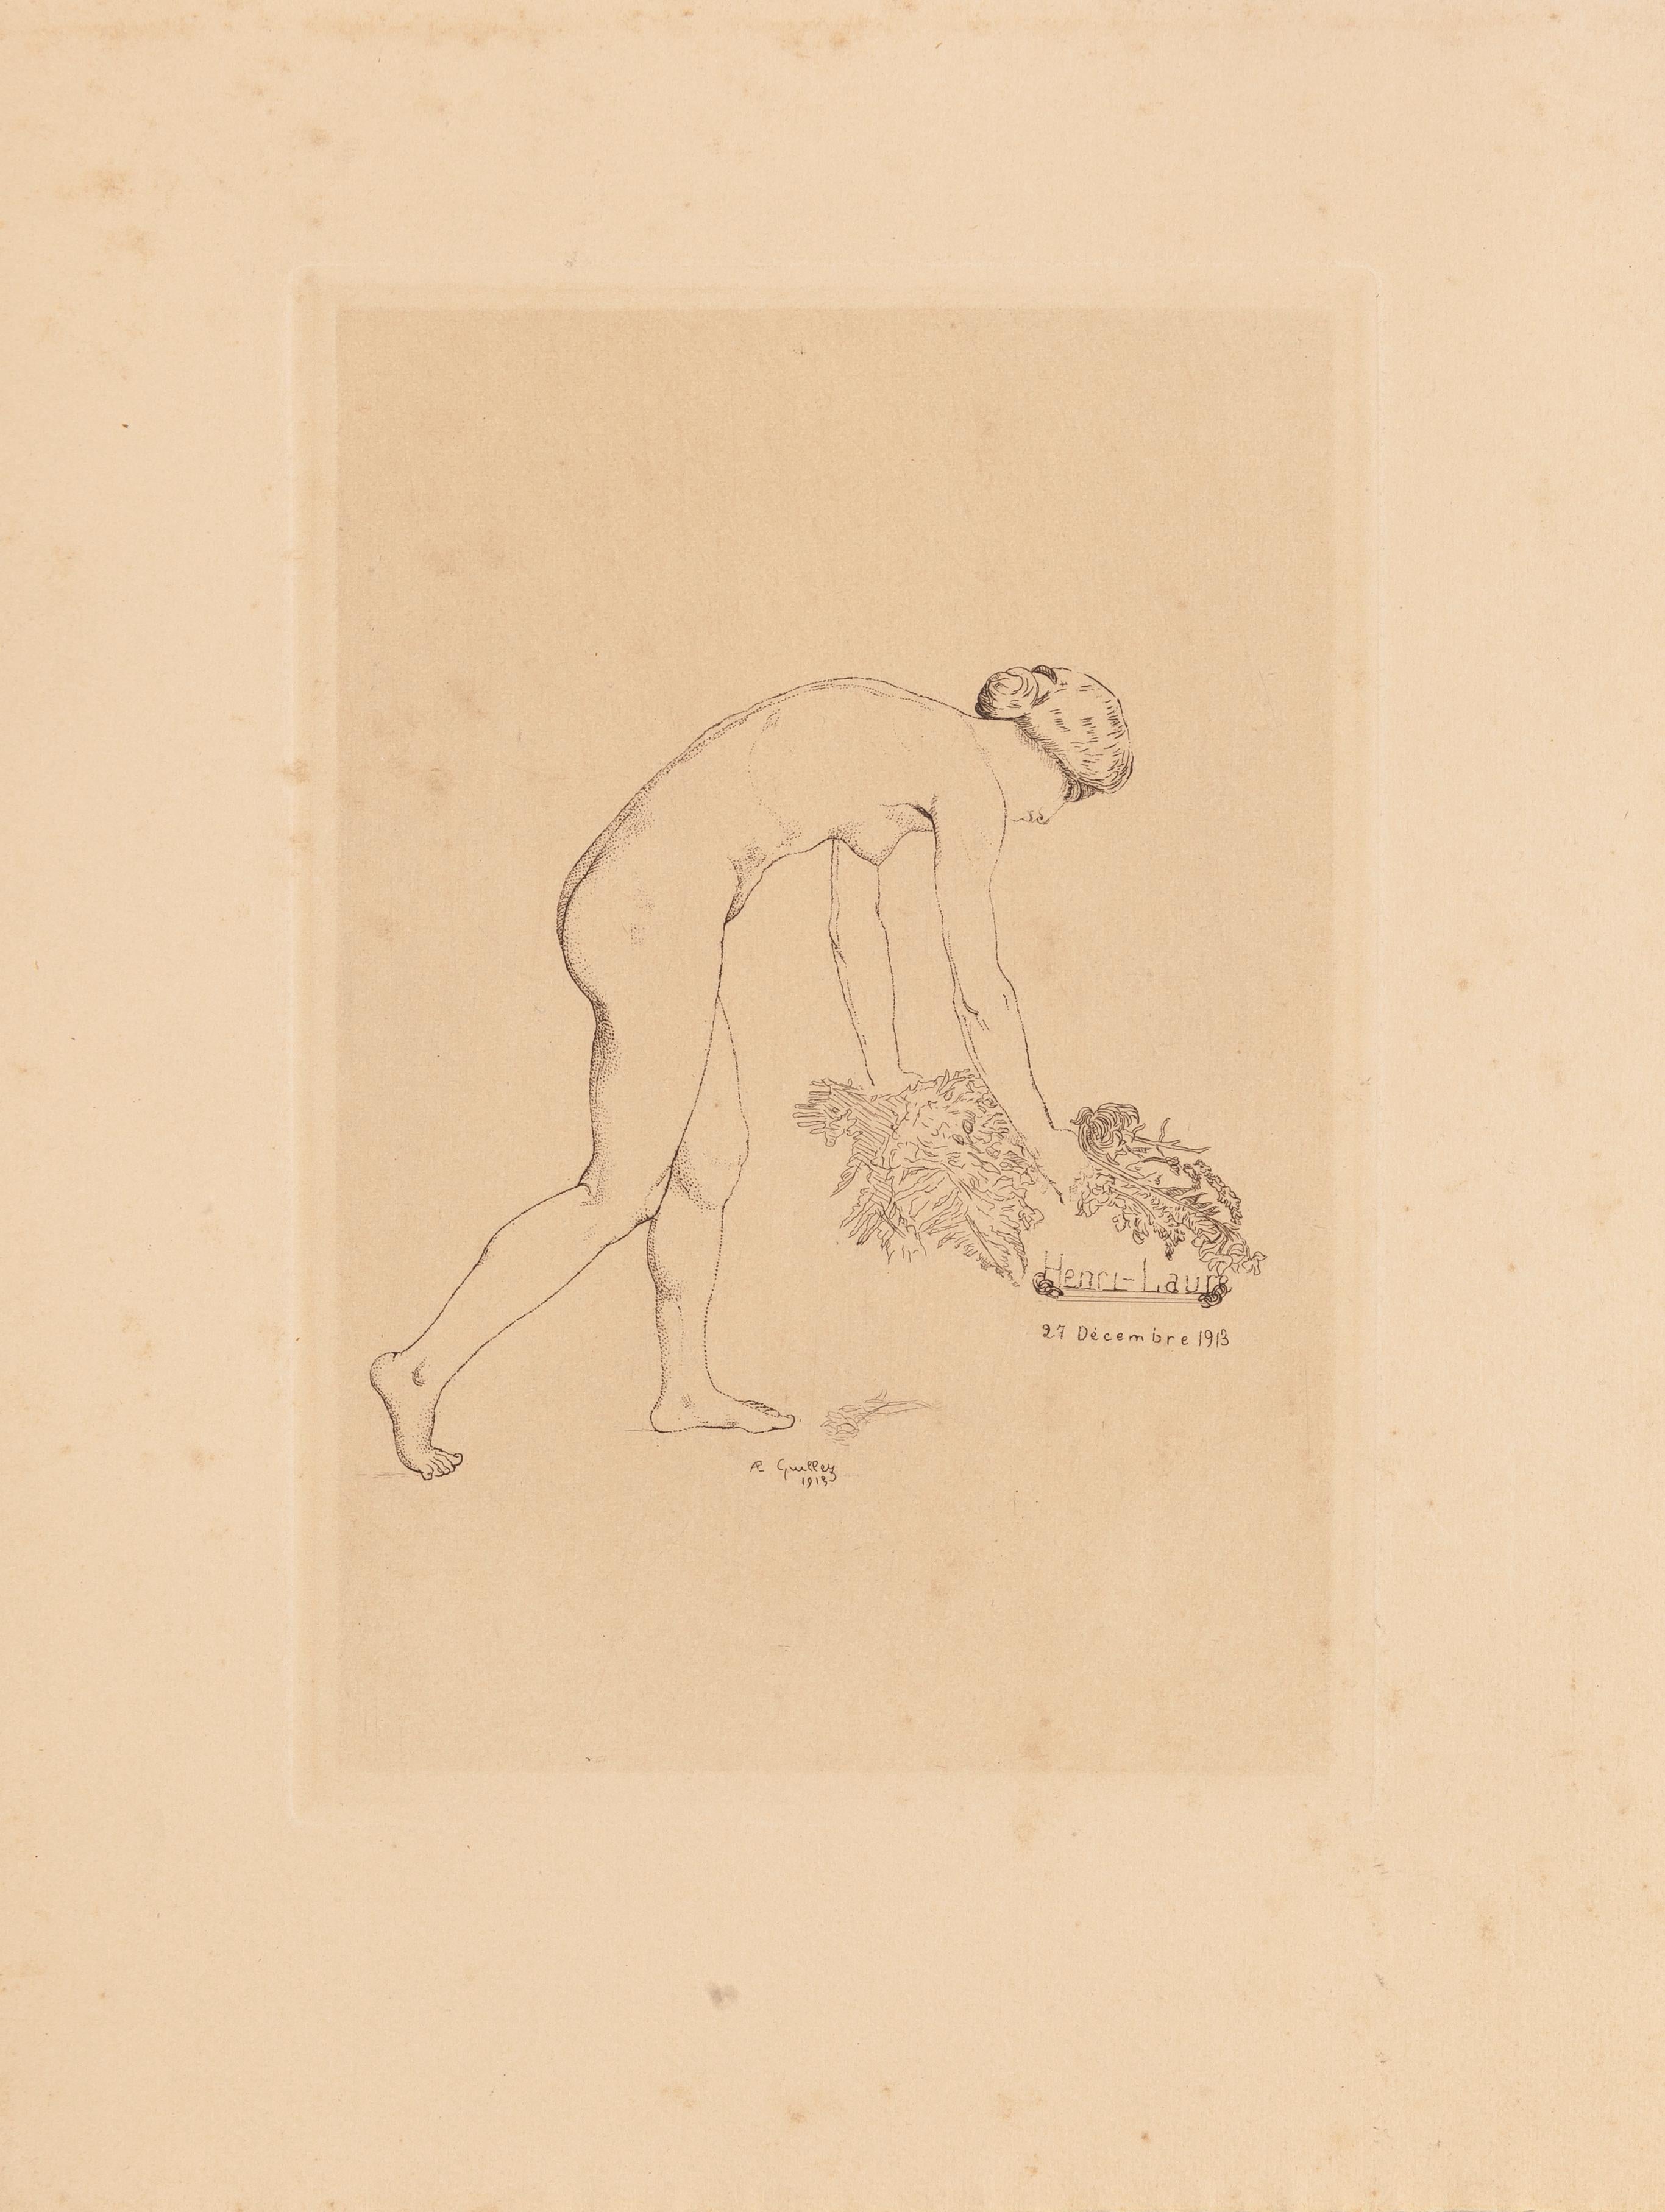 Nudefarbene Frau - Original-Radierung y A.E. Guillez - 1913 – Print von Arthur Edouard Guillez